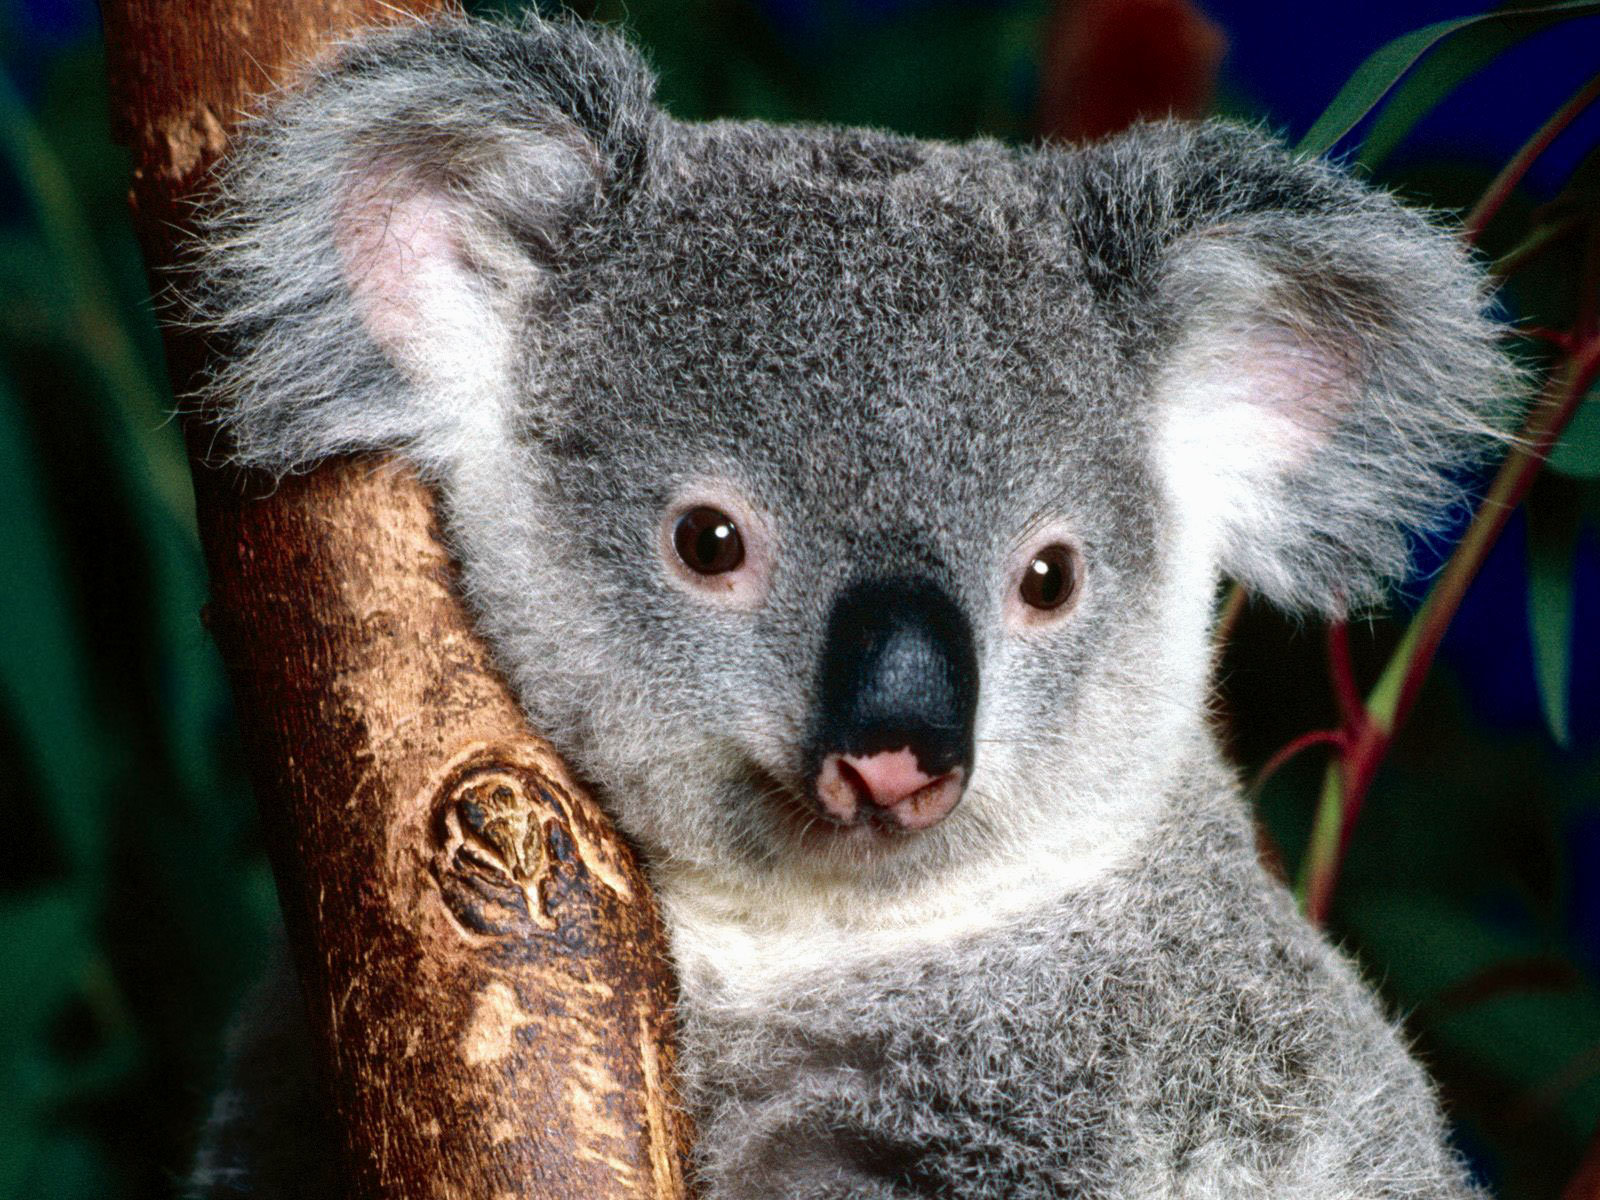 Koala-like Animals Date Back Over 25 Million Years